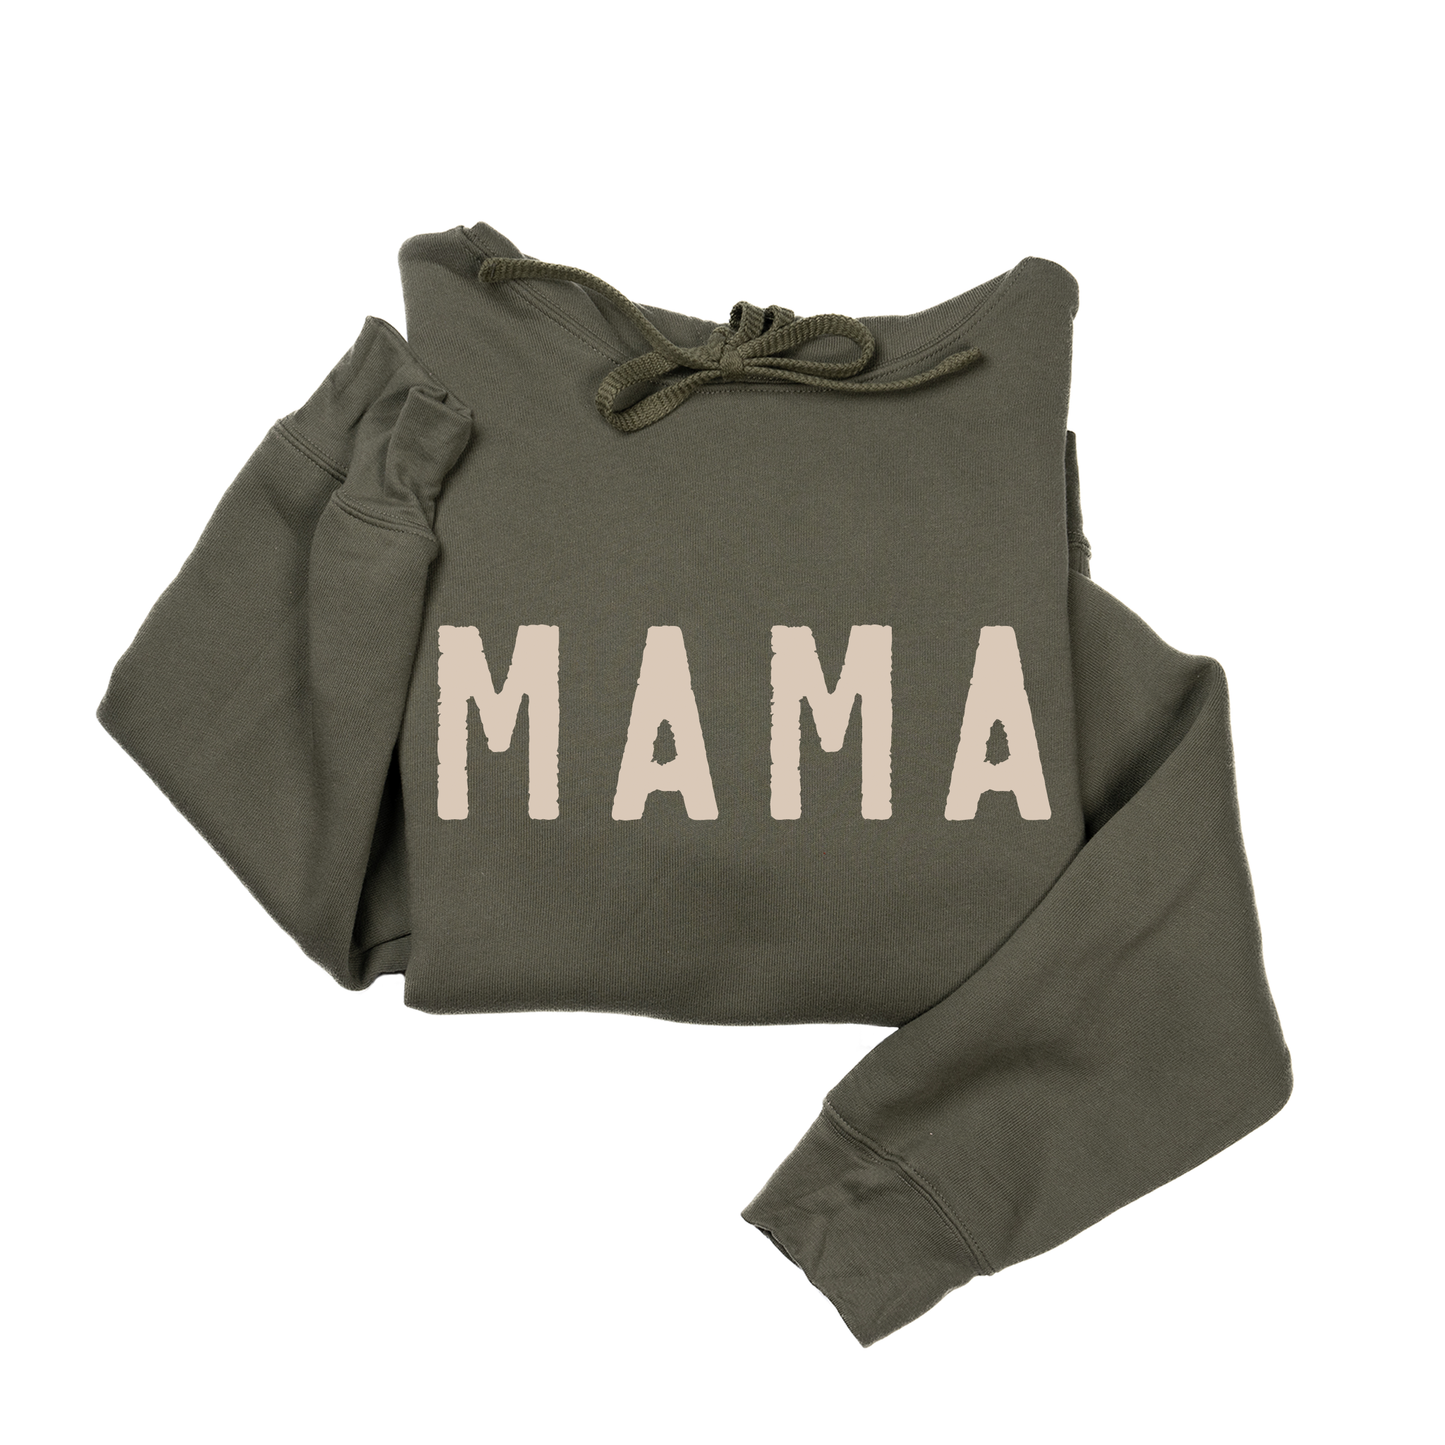 Mama (Rough, Stone) - Hoodie (Military Green)